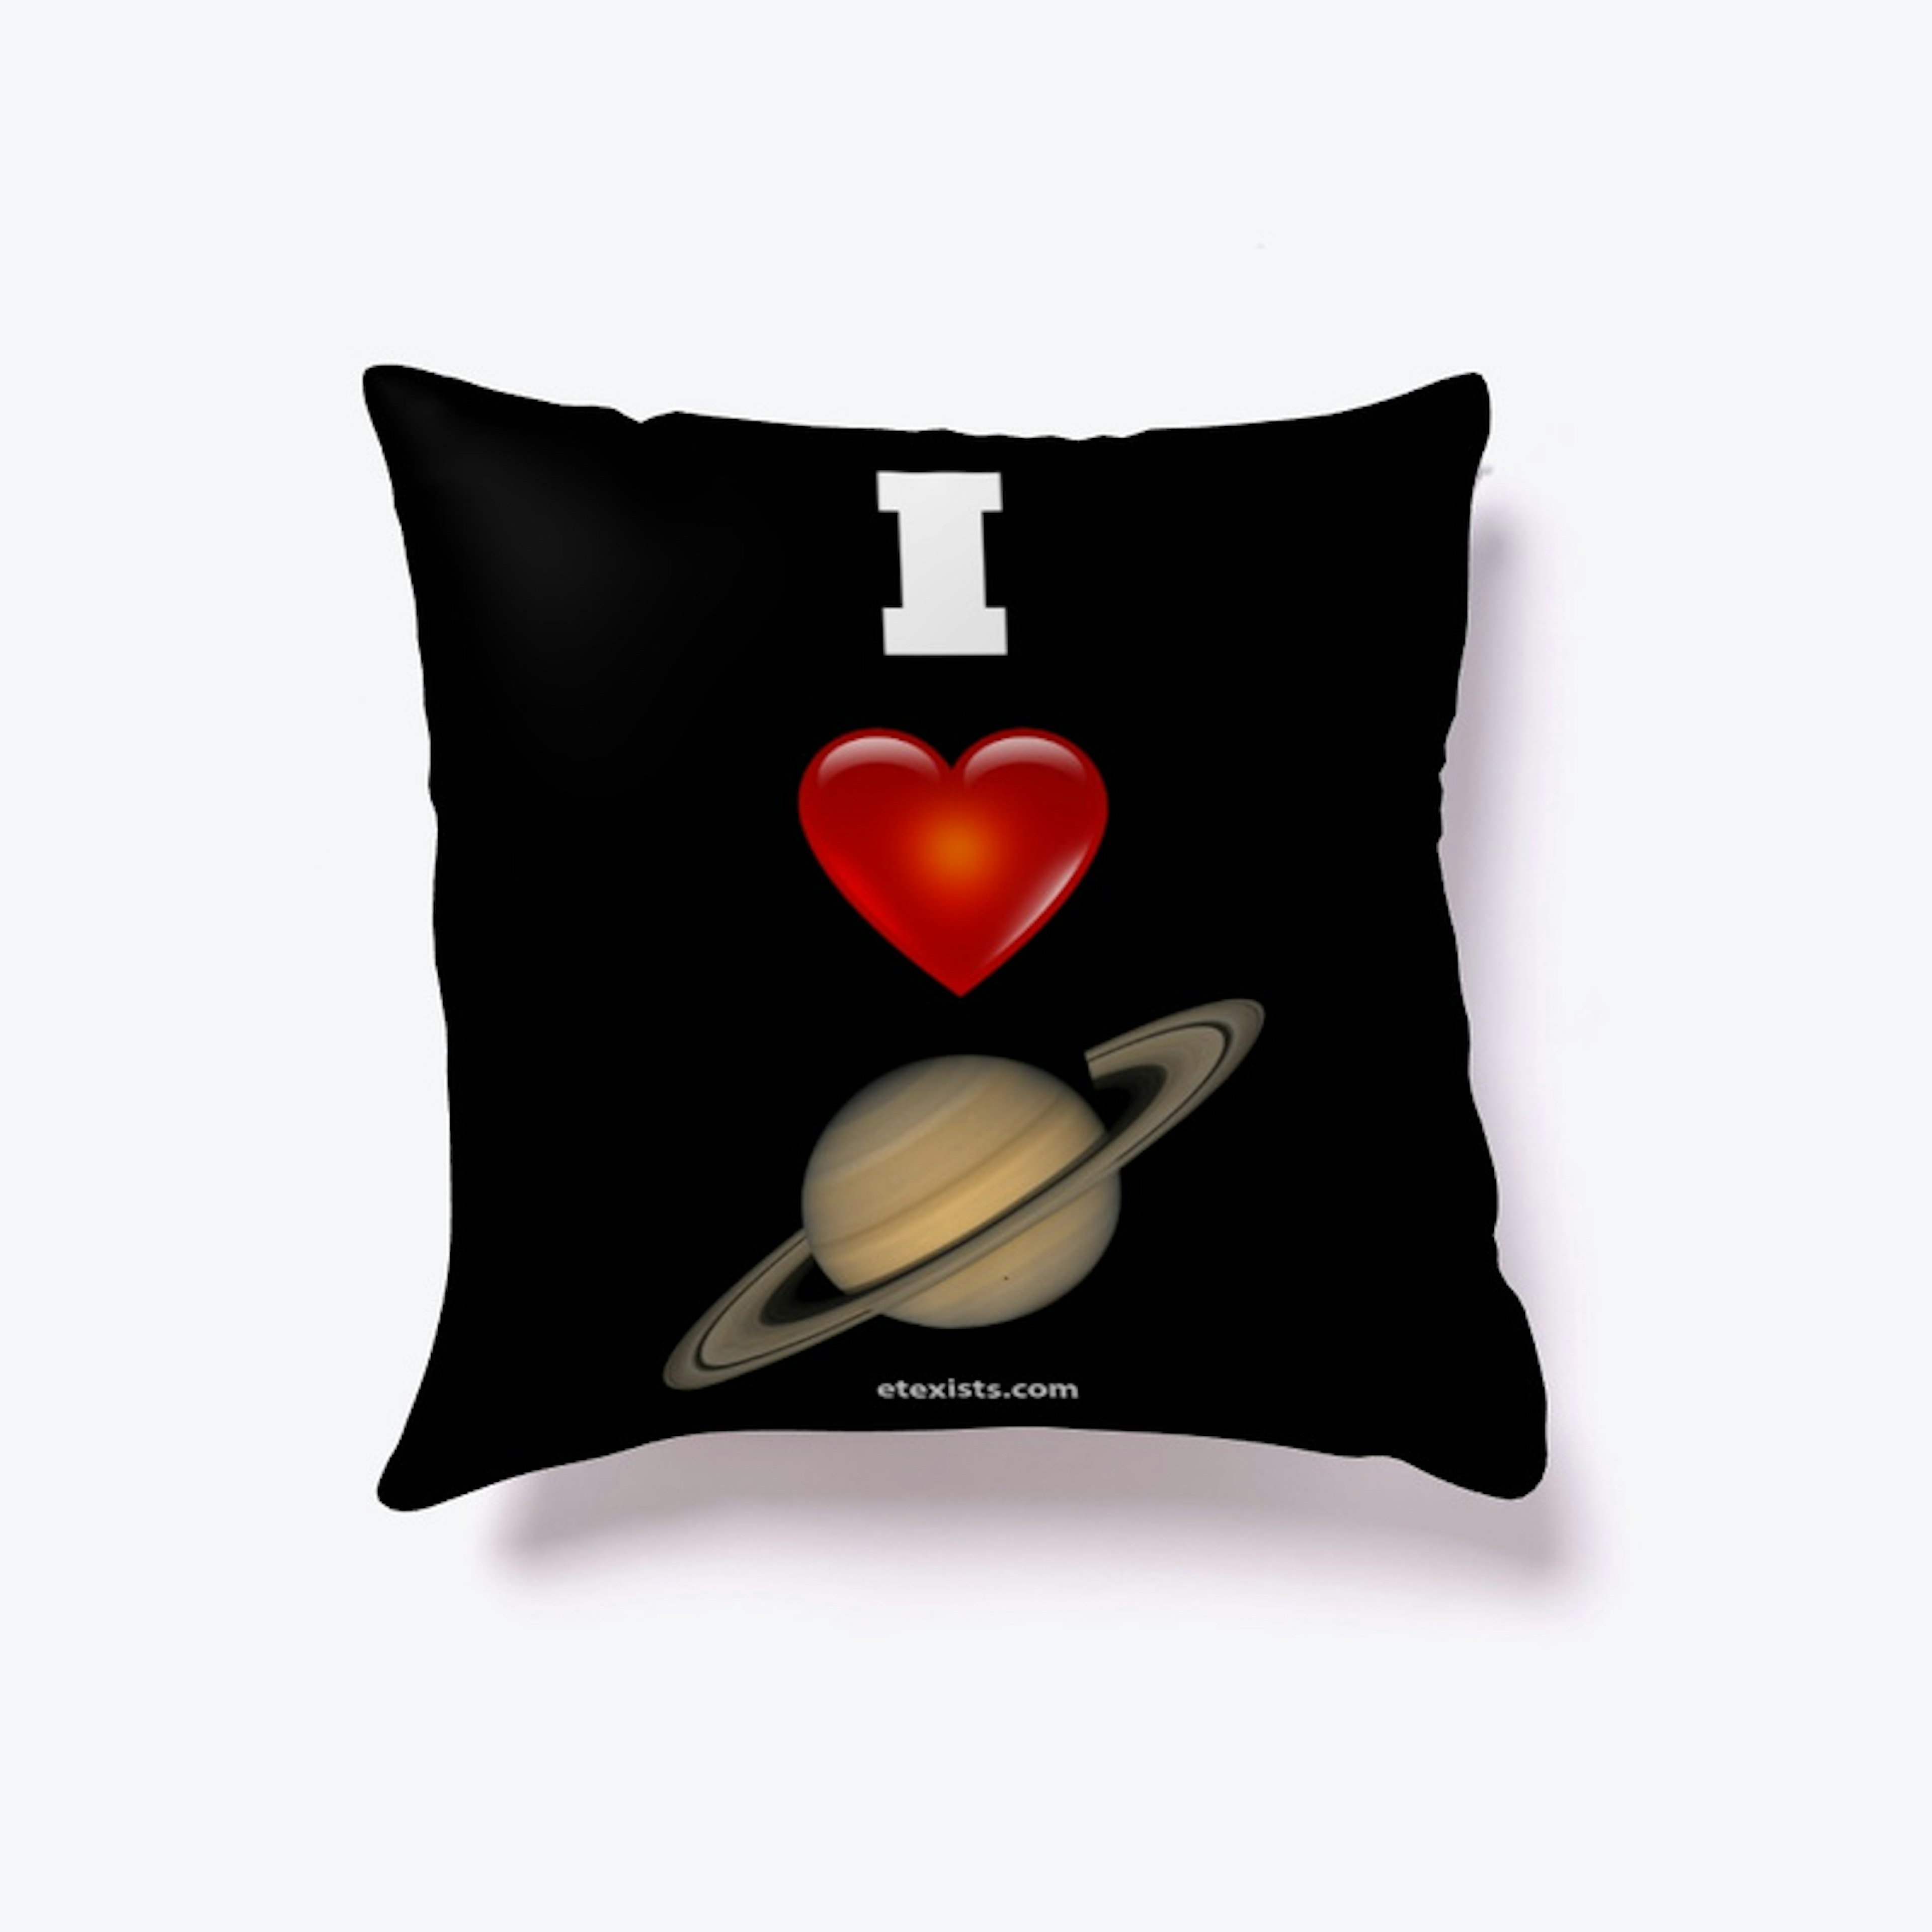 I Love Saturn